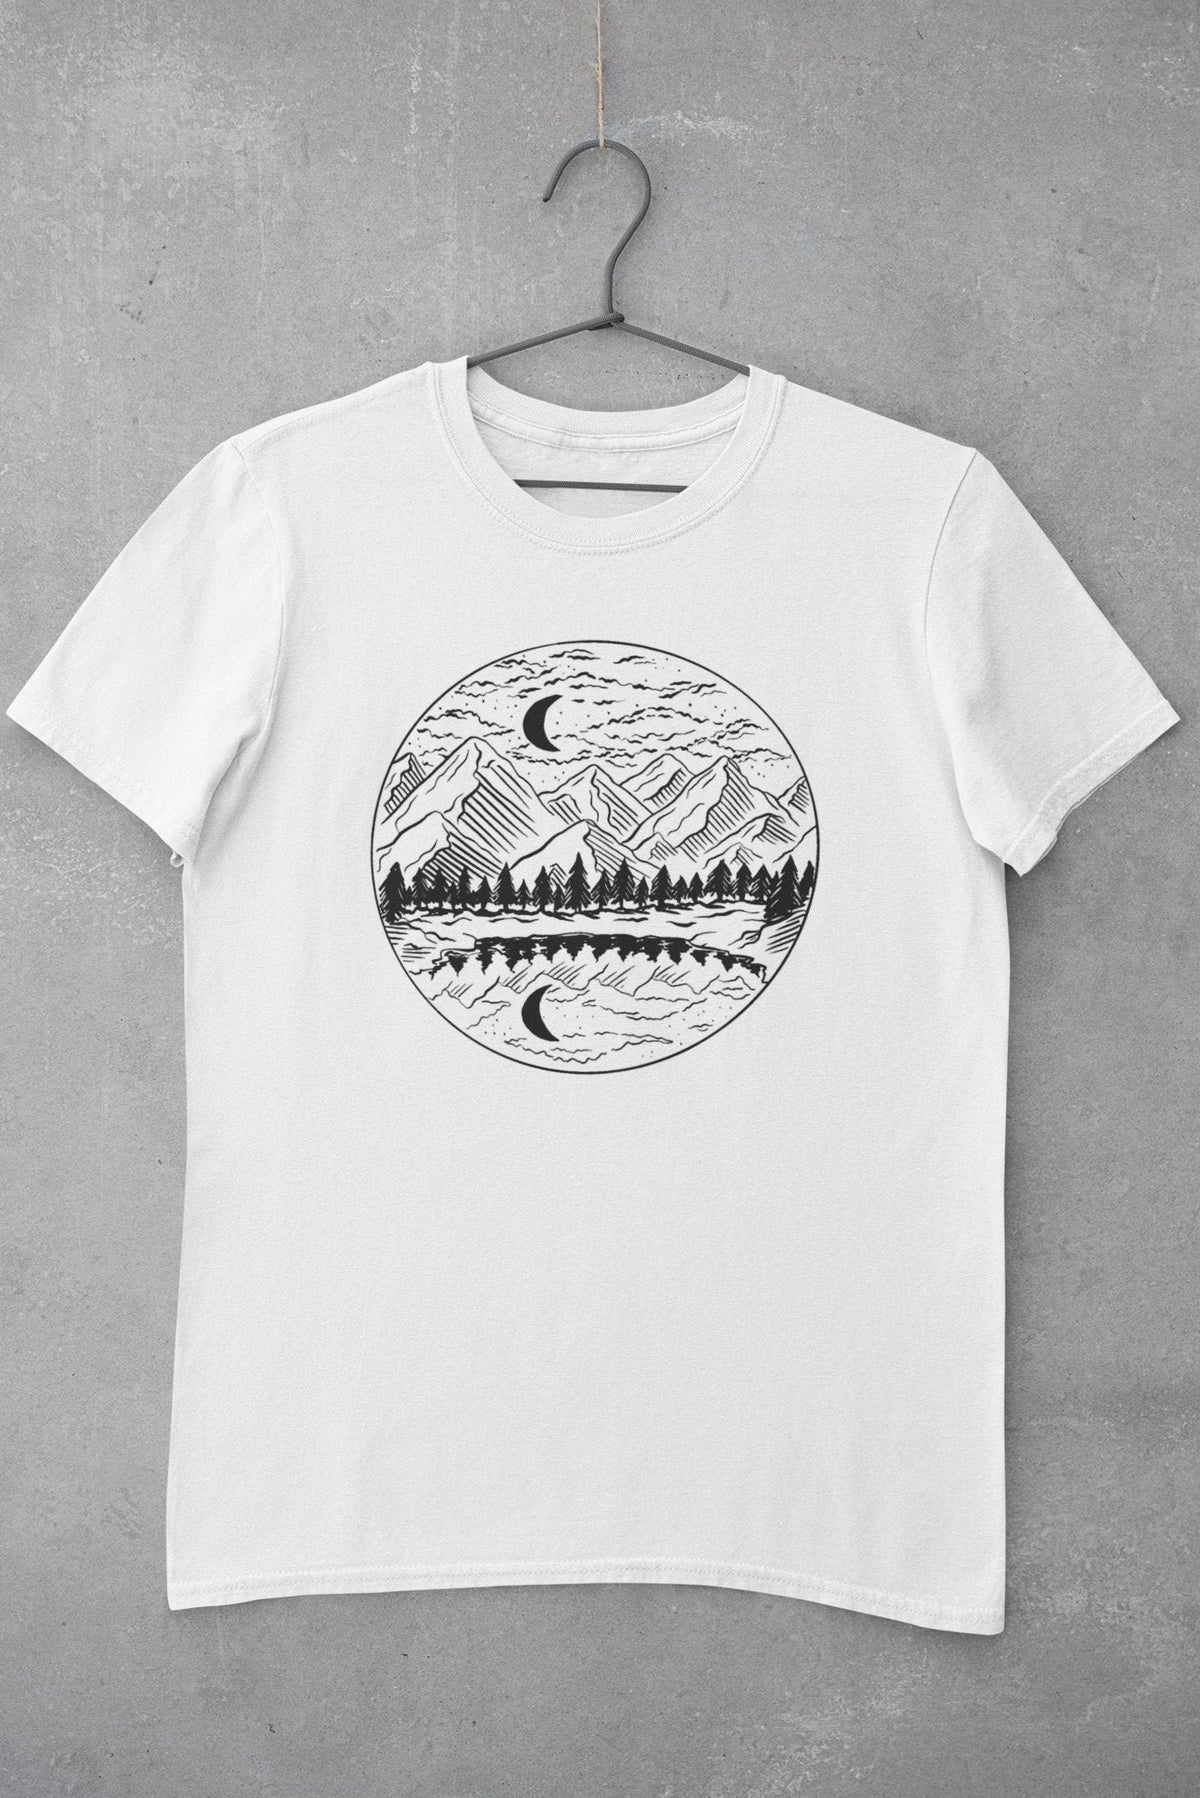 Forest Mountain Moon TShirt - Unisex Custom Tee - Area F Island Clothing